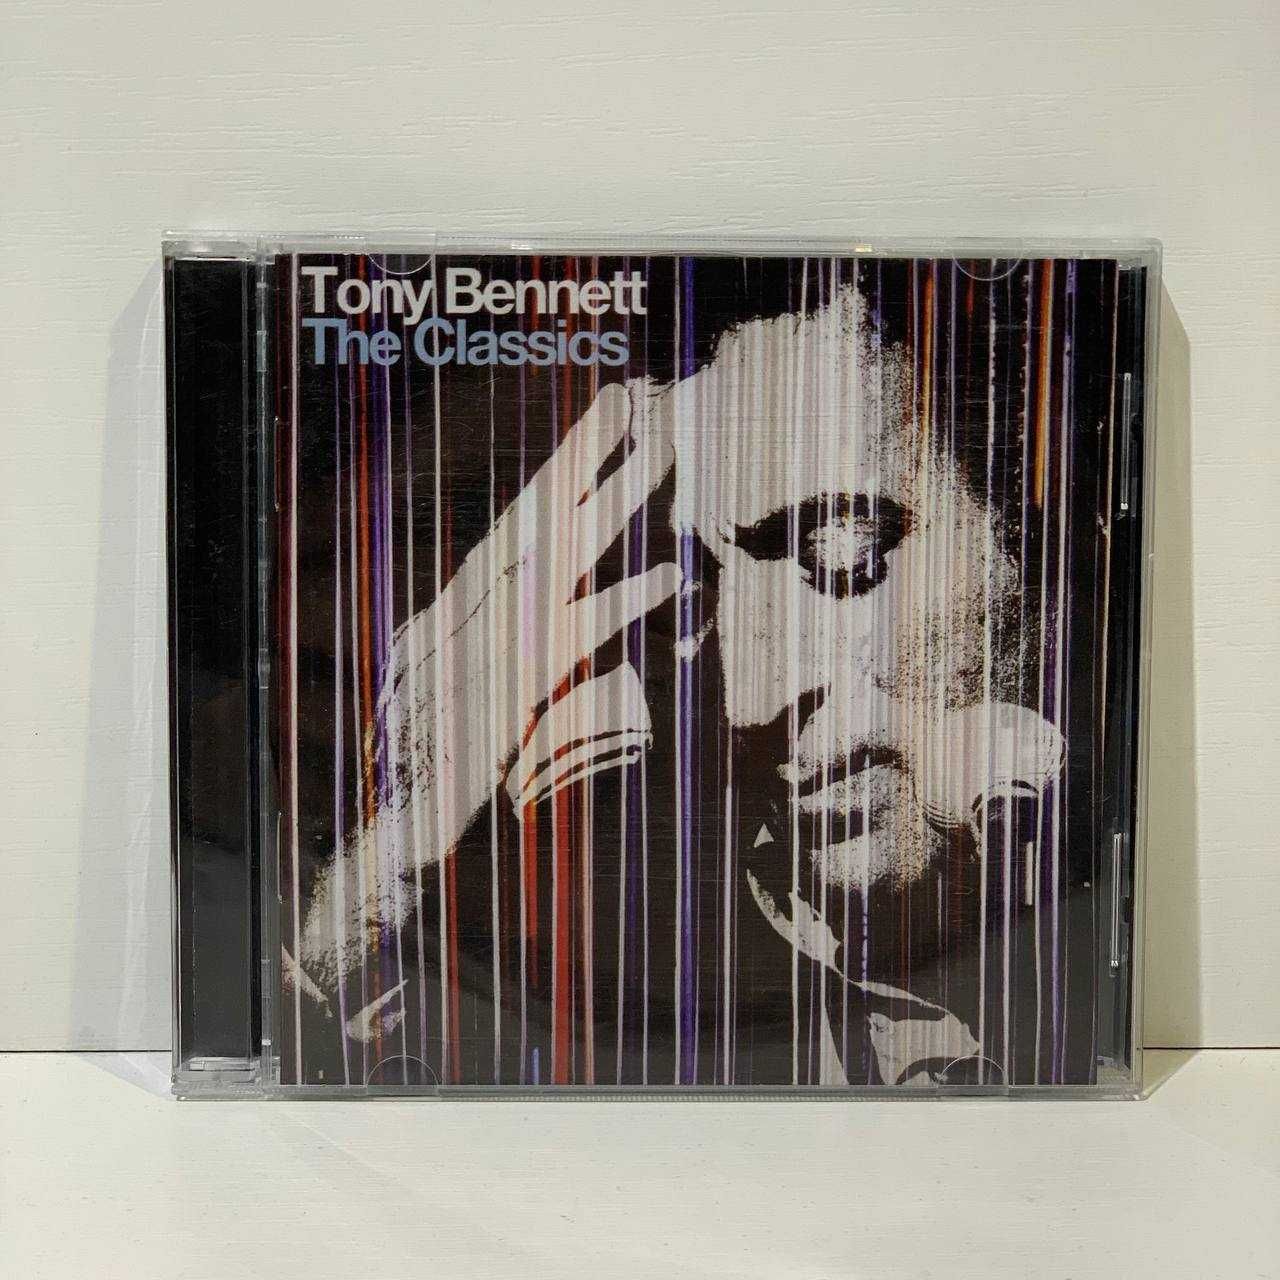 CD диск TONY BENNETT The Classics альбом аудио музыка НОВЫЙ